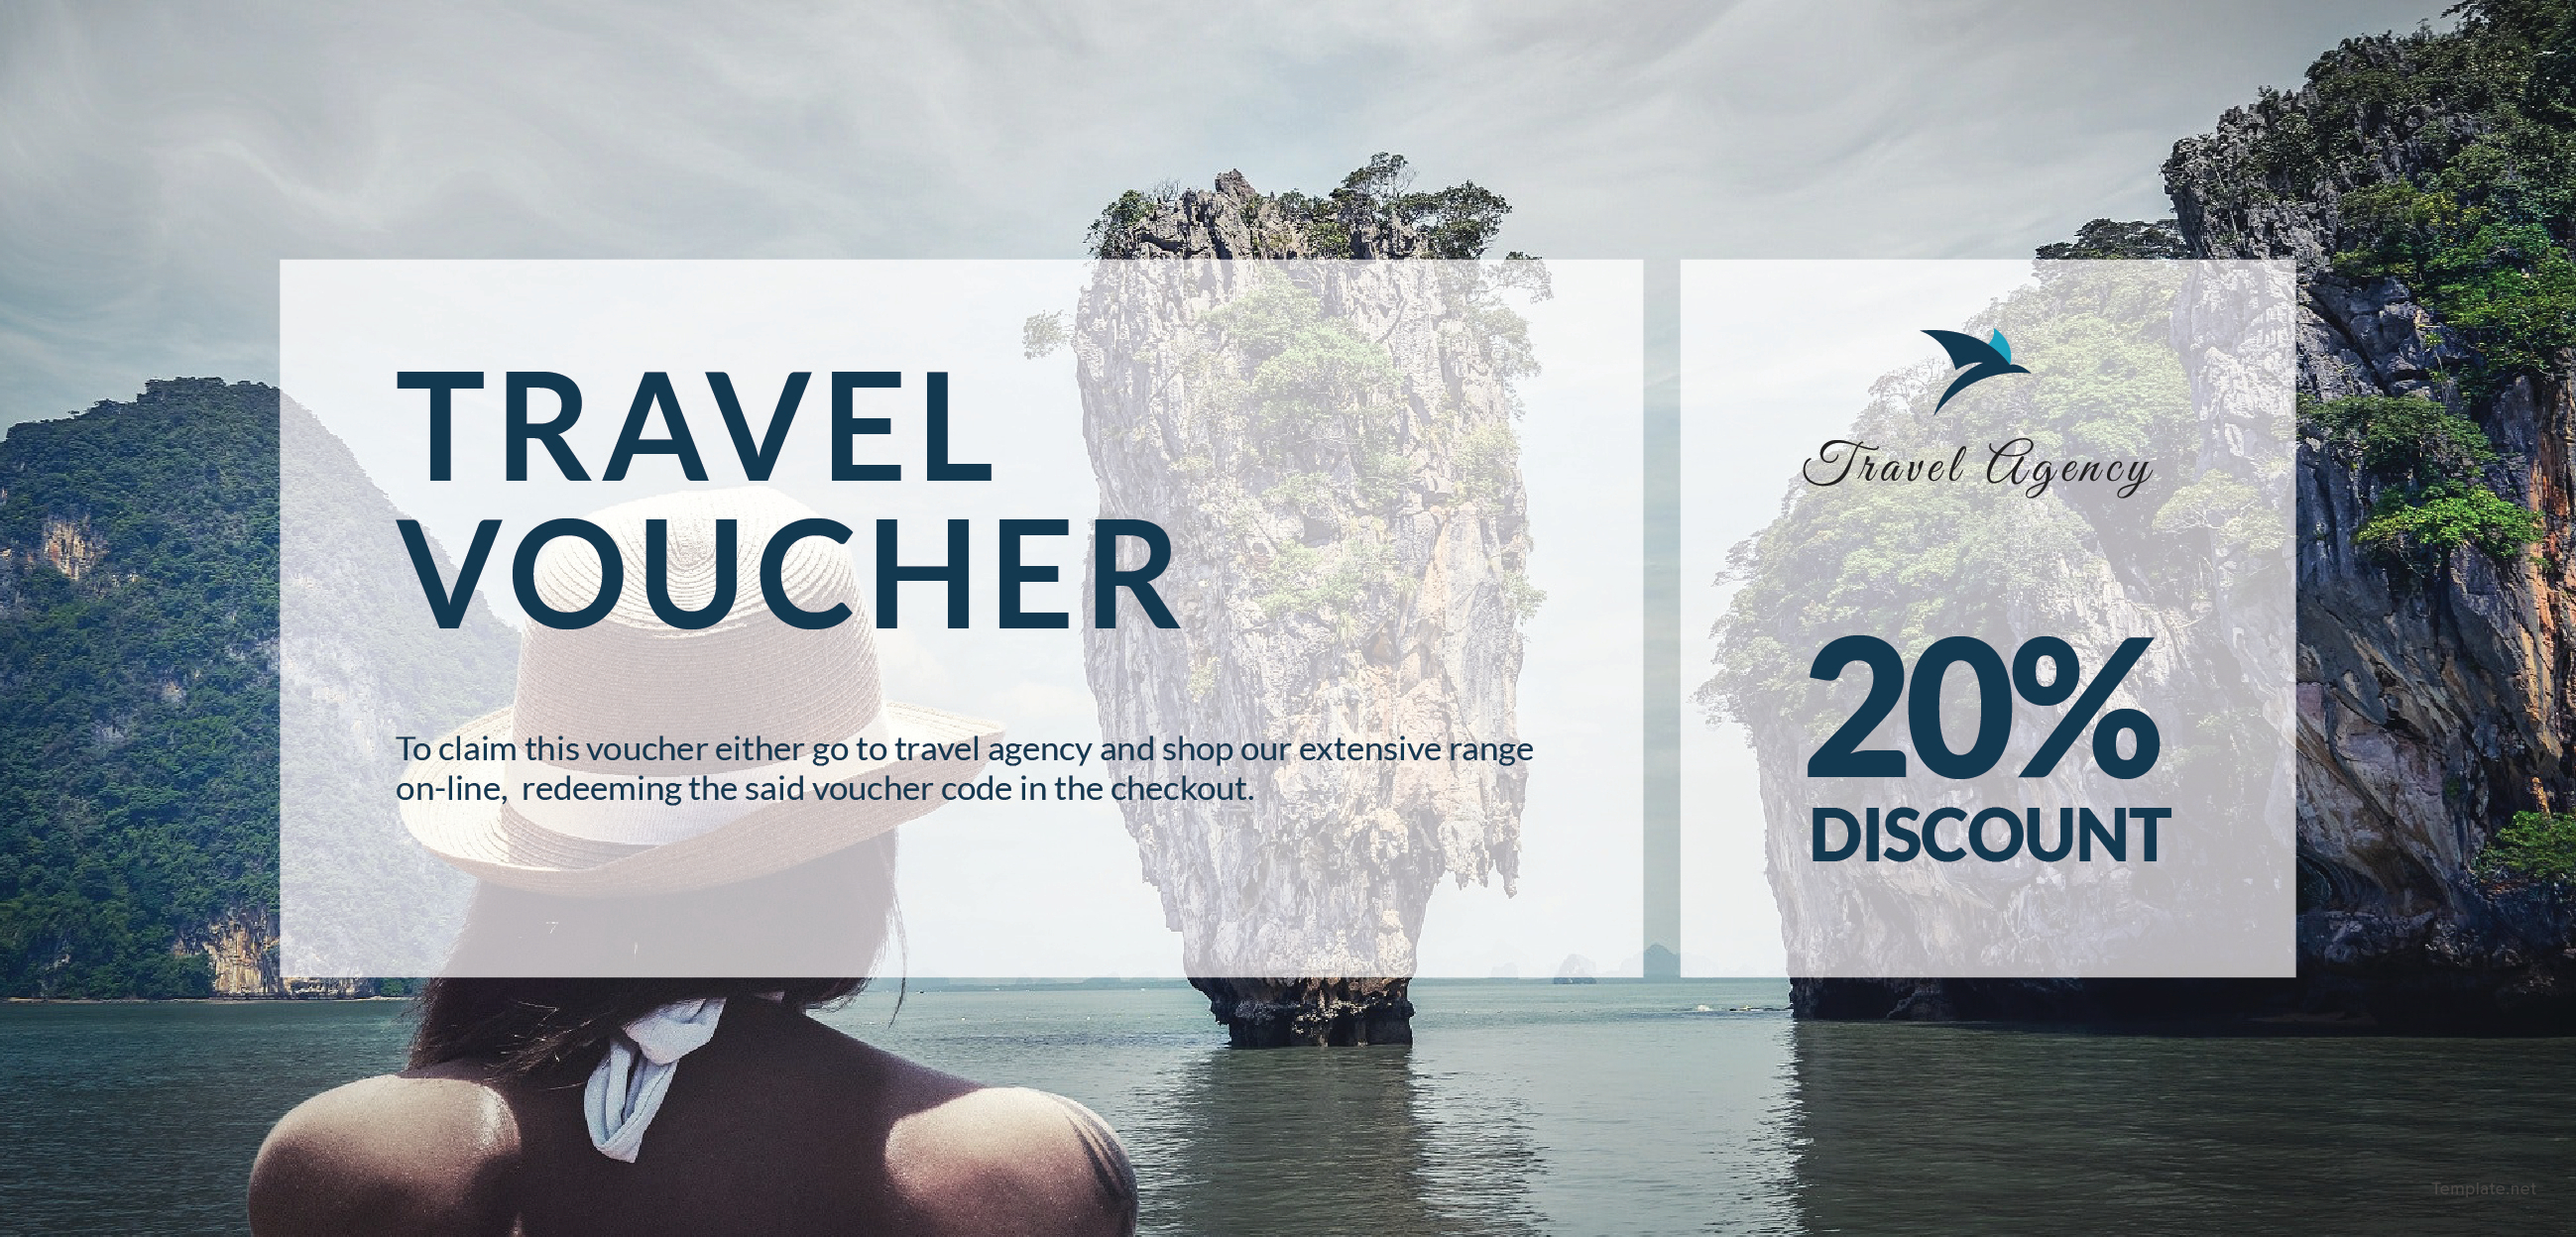 Travel Voucher Template in Adobe Photoshop Illustrator Template net